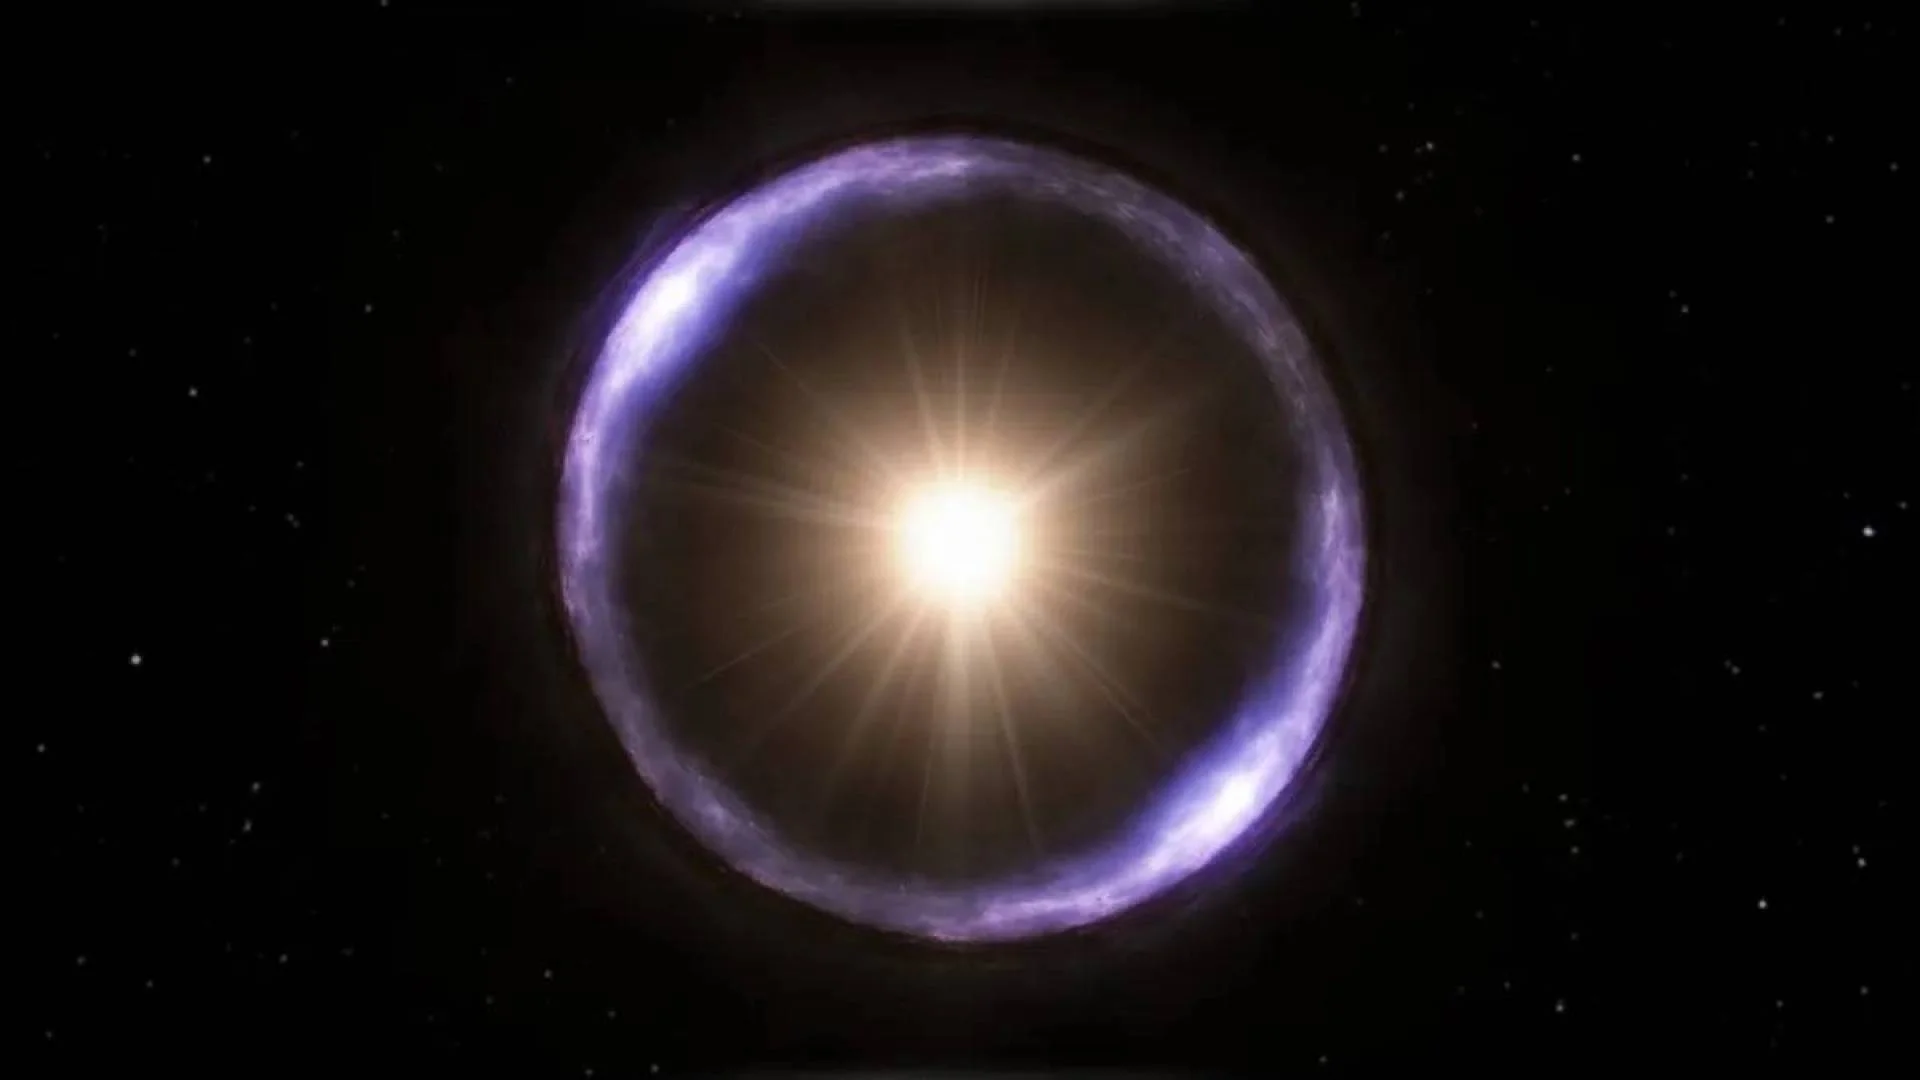 NASA intends to use the Sun as a lens